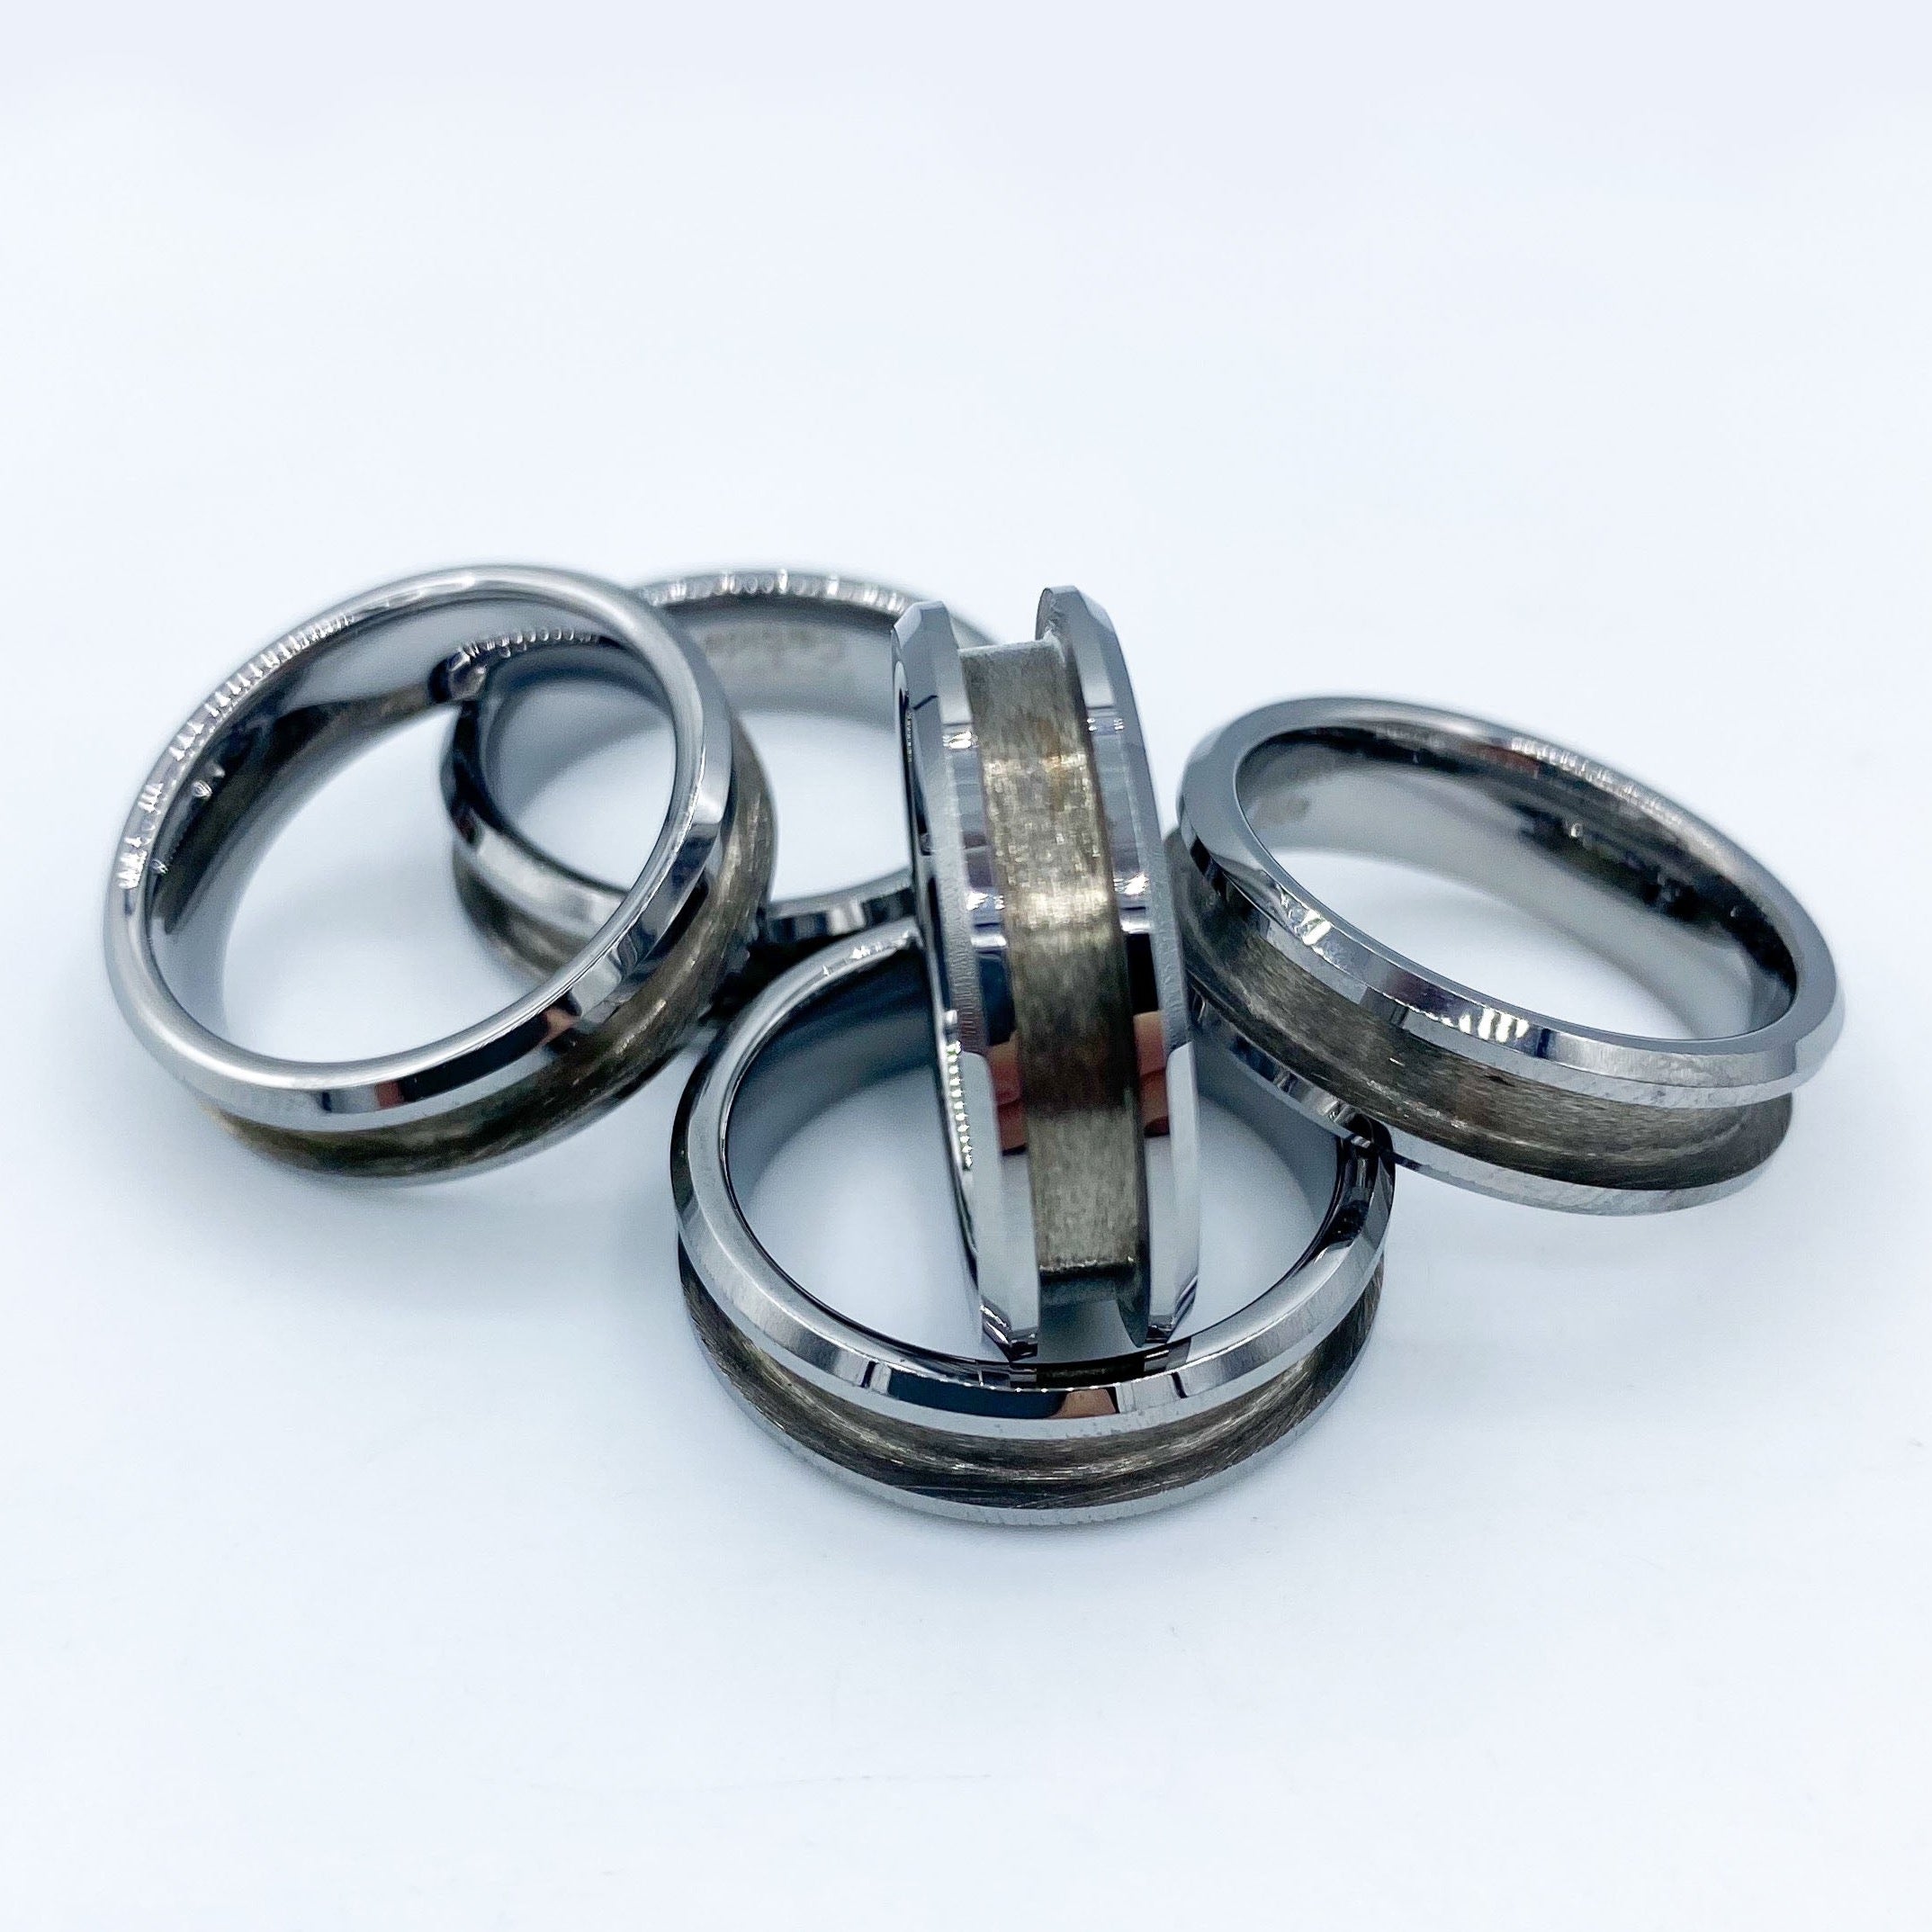 100S JEWELRY White Gold Tungsten Rings For Men Women Wedding Band  SandBlasted Finish Dome Edge Sizes 6-16 (Custom Text Engraving, 6) |  Amazon.com